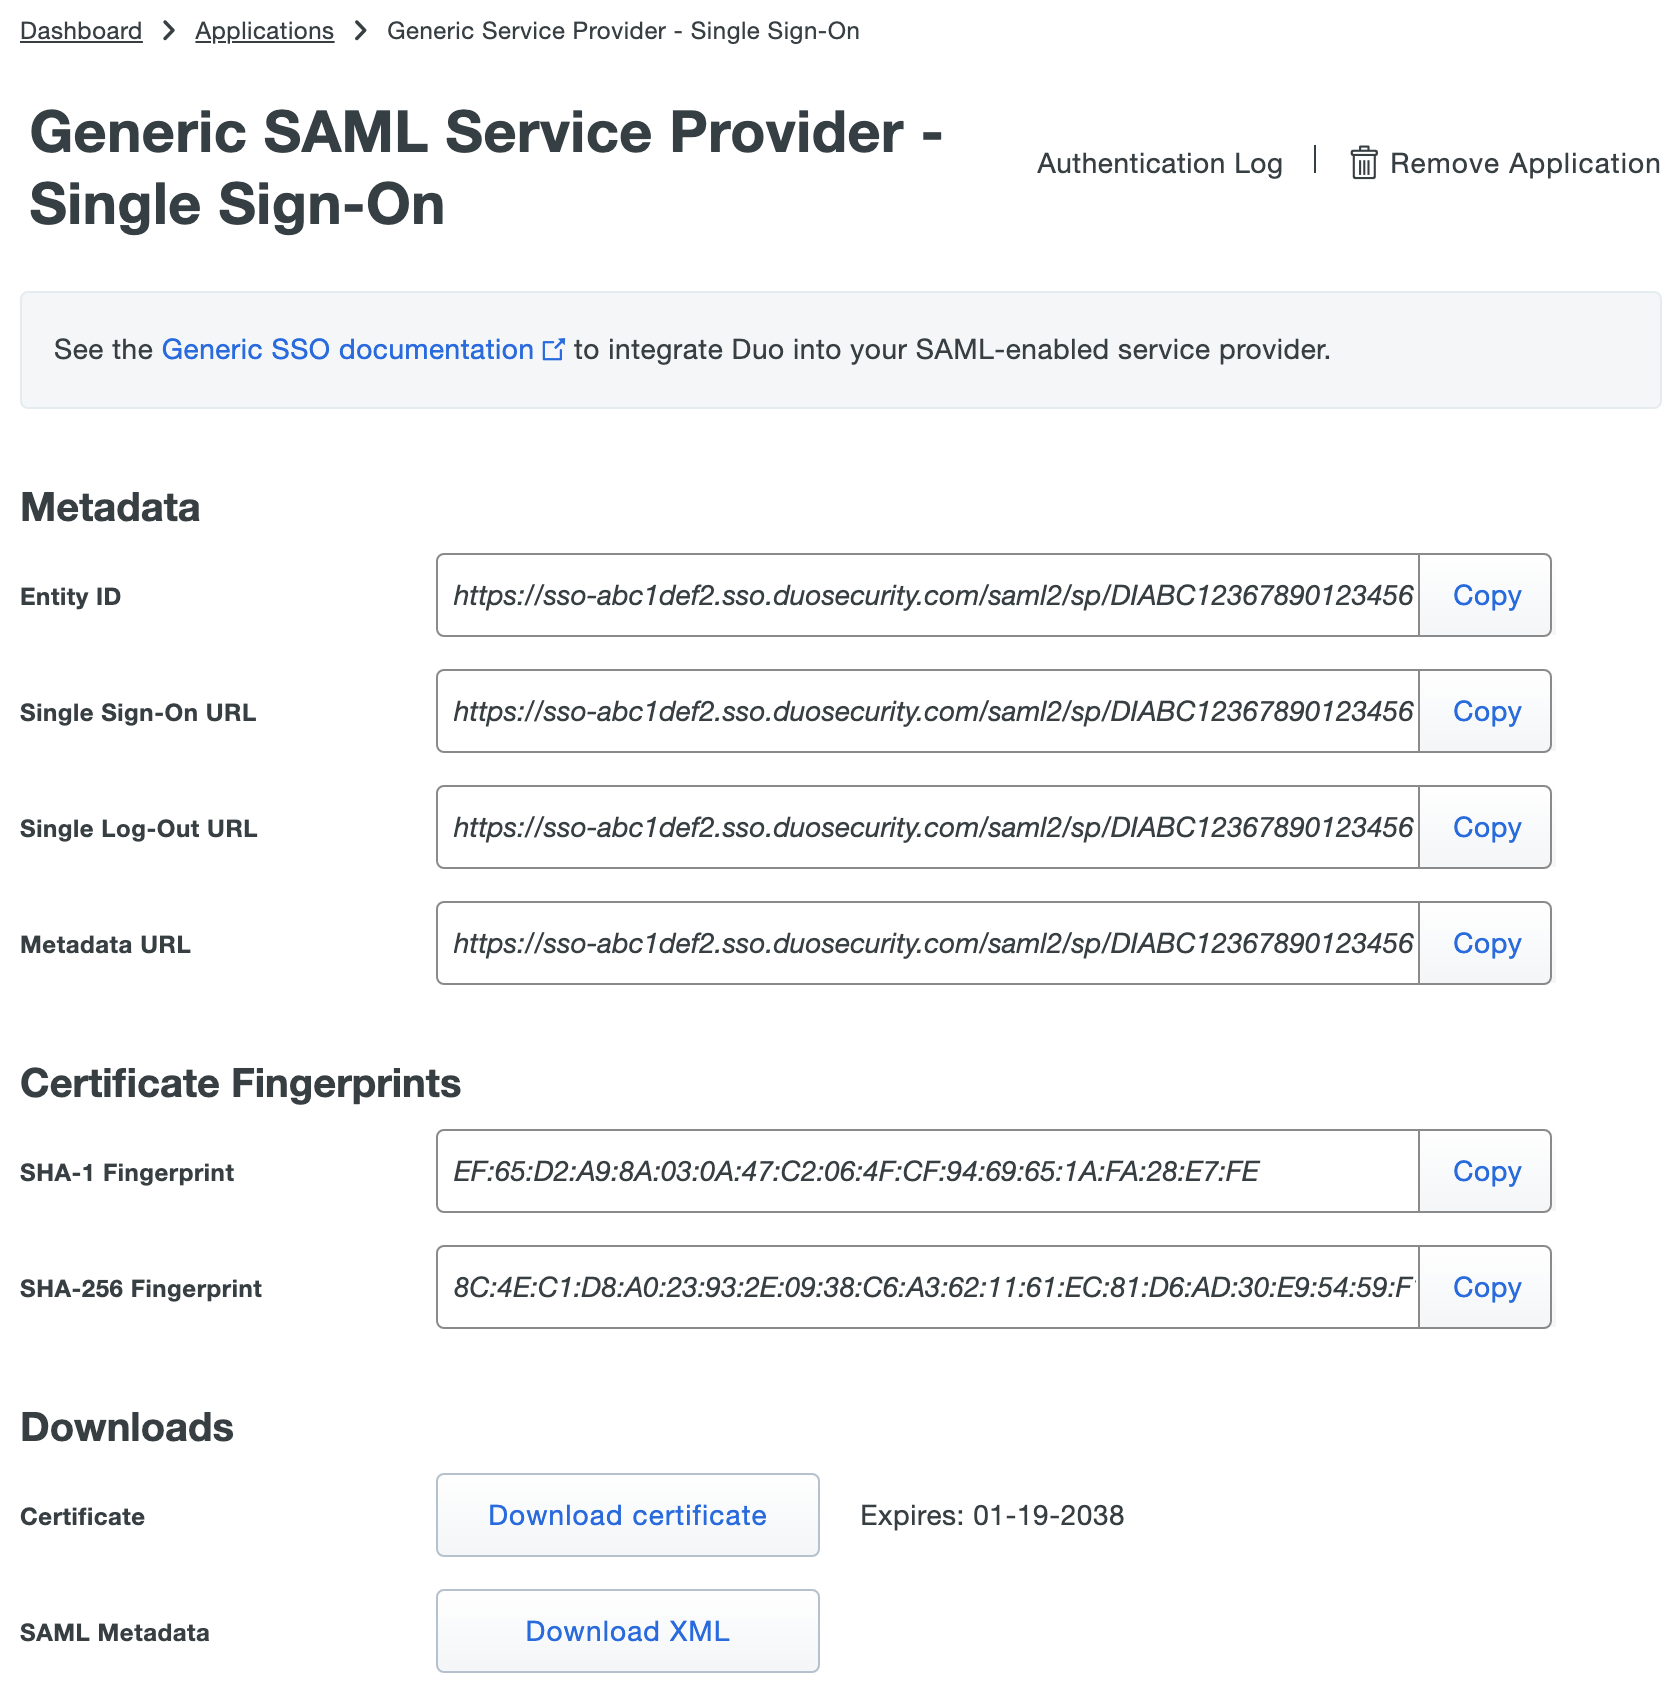 Metadata for configuring generic SAML service providers